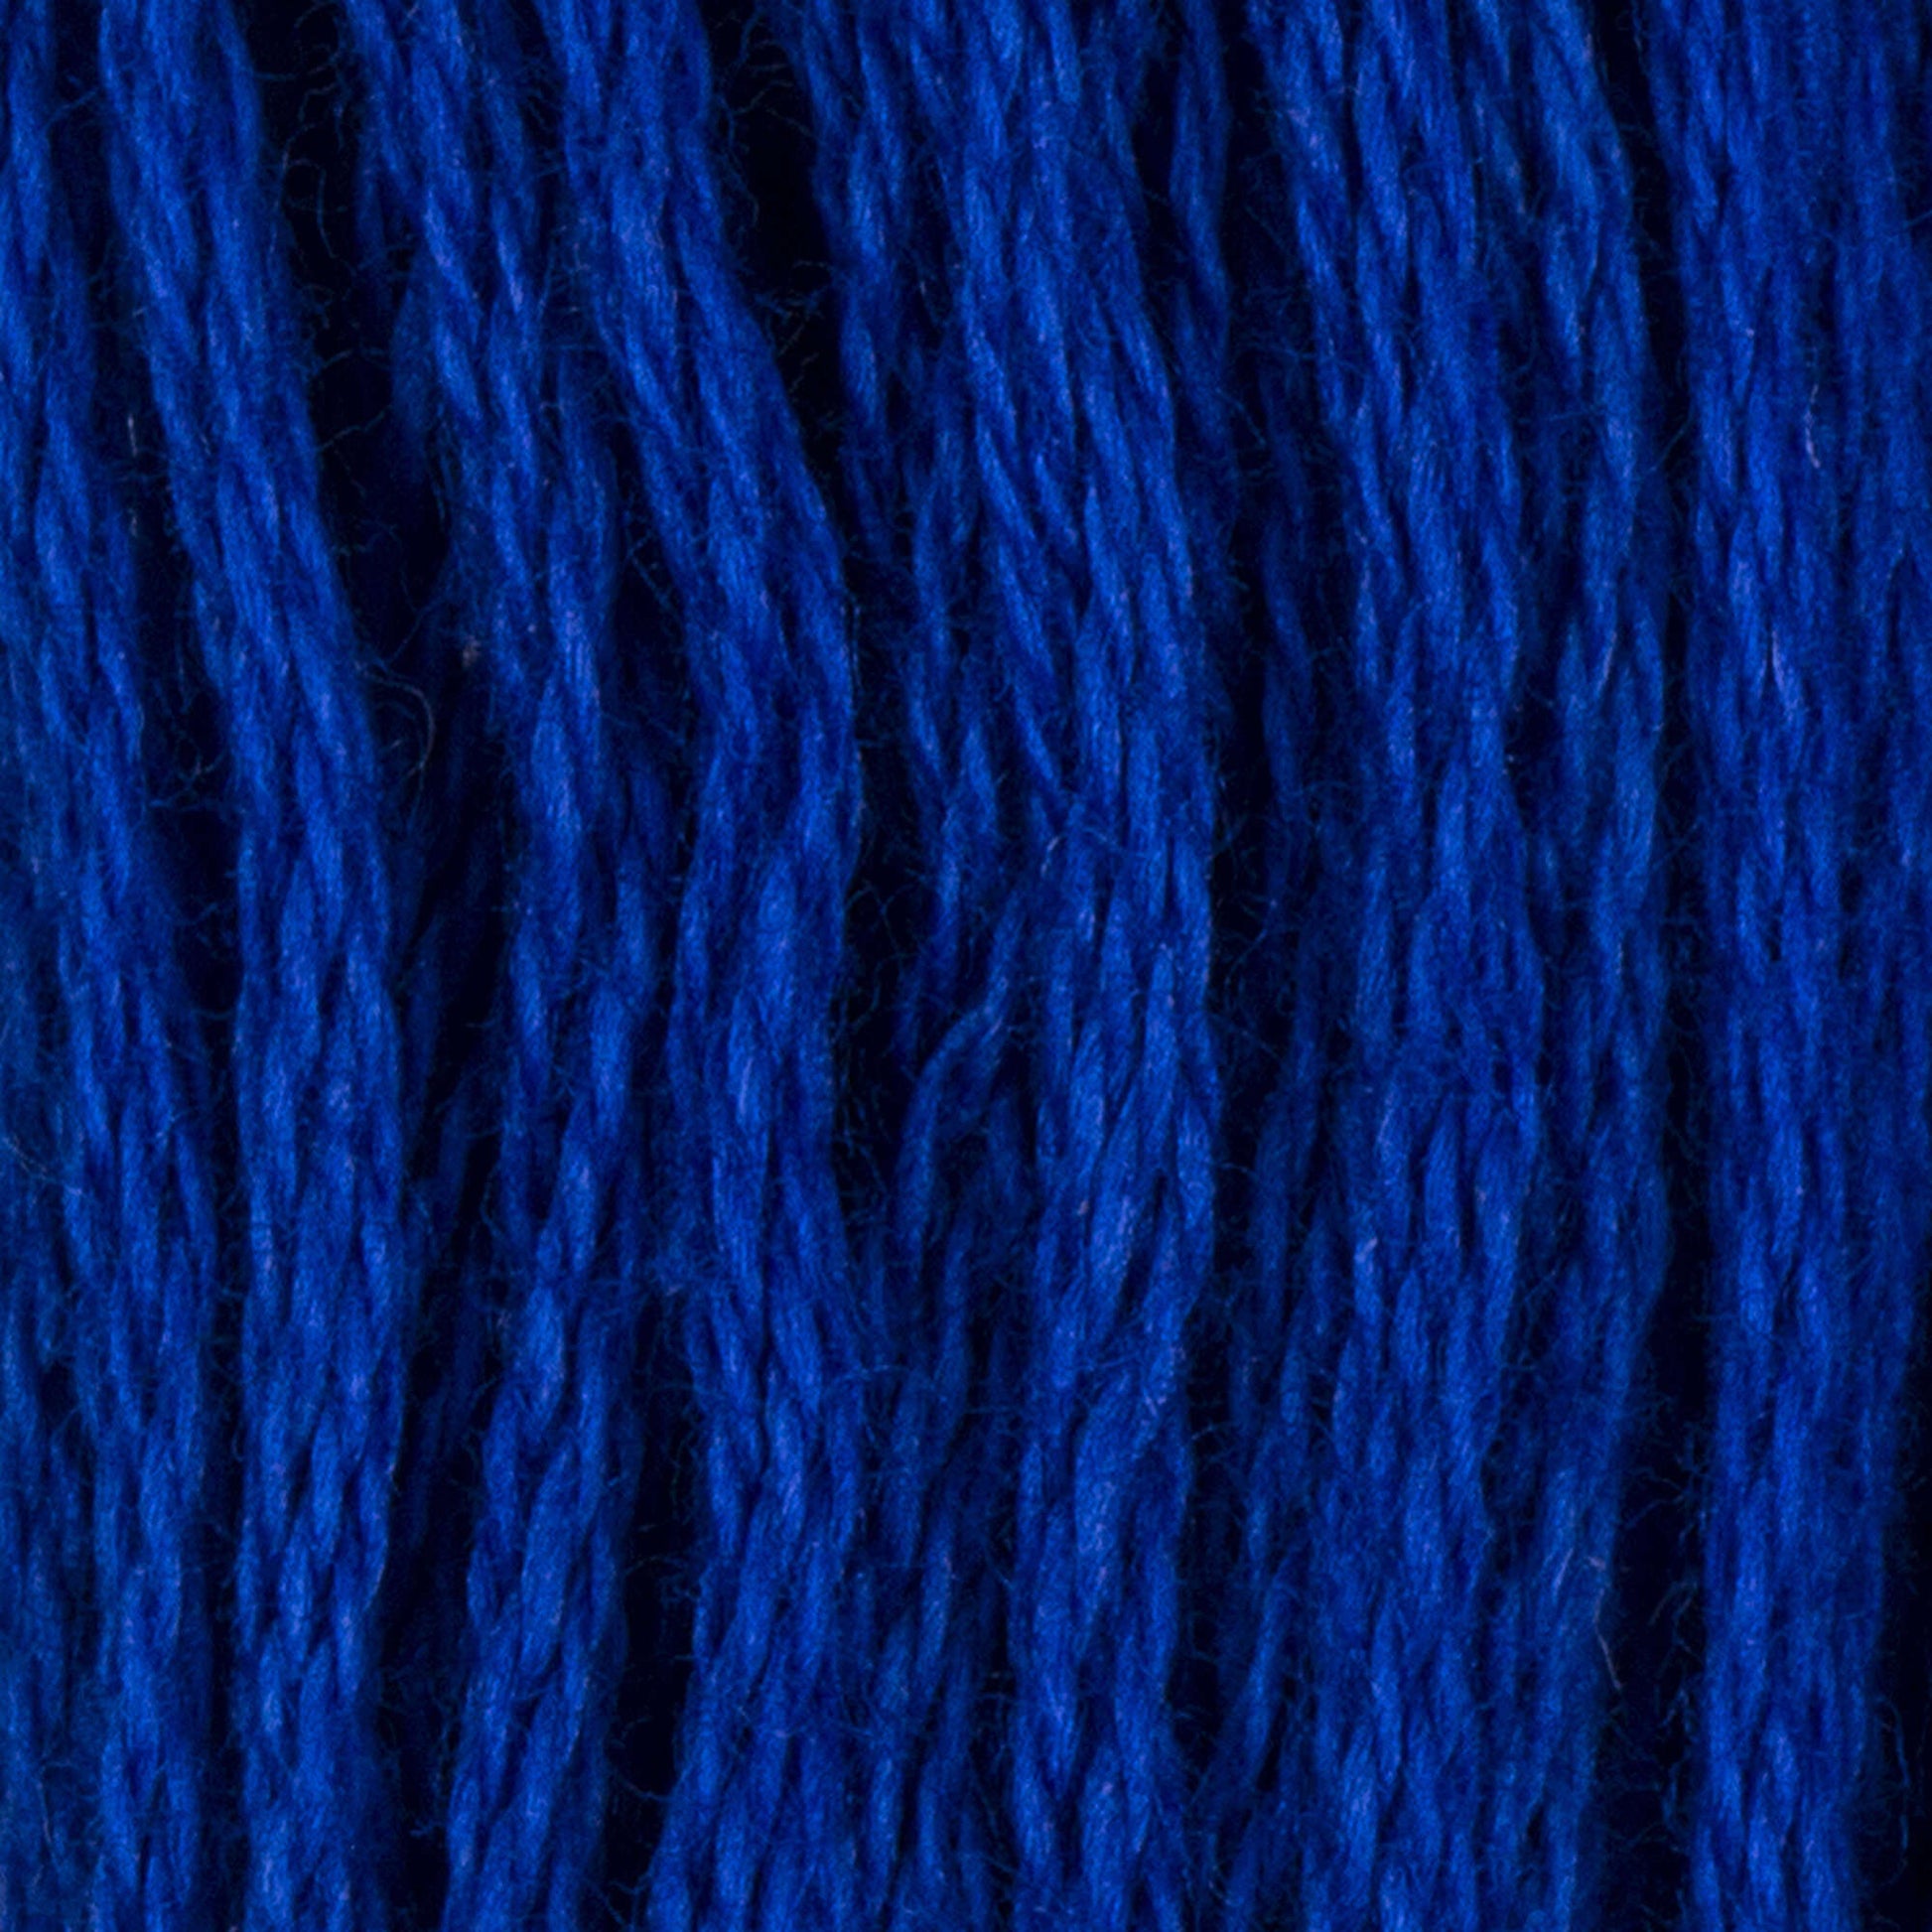 Coats & Clark Cotton Embroidery Floss Navy Blue Dark